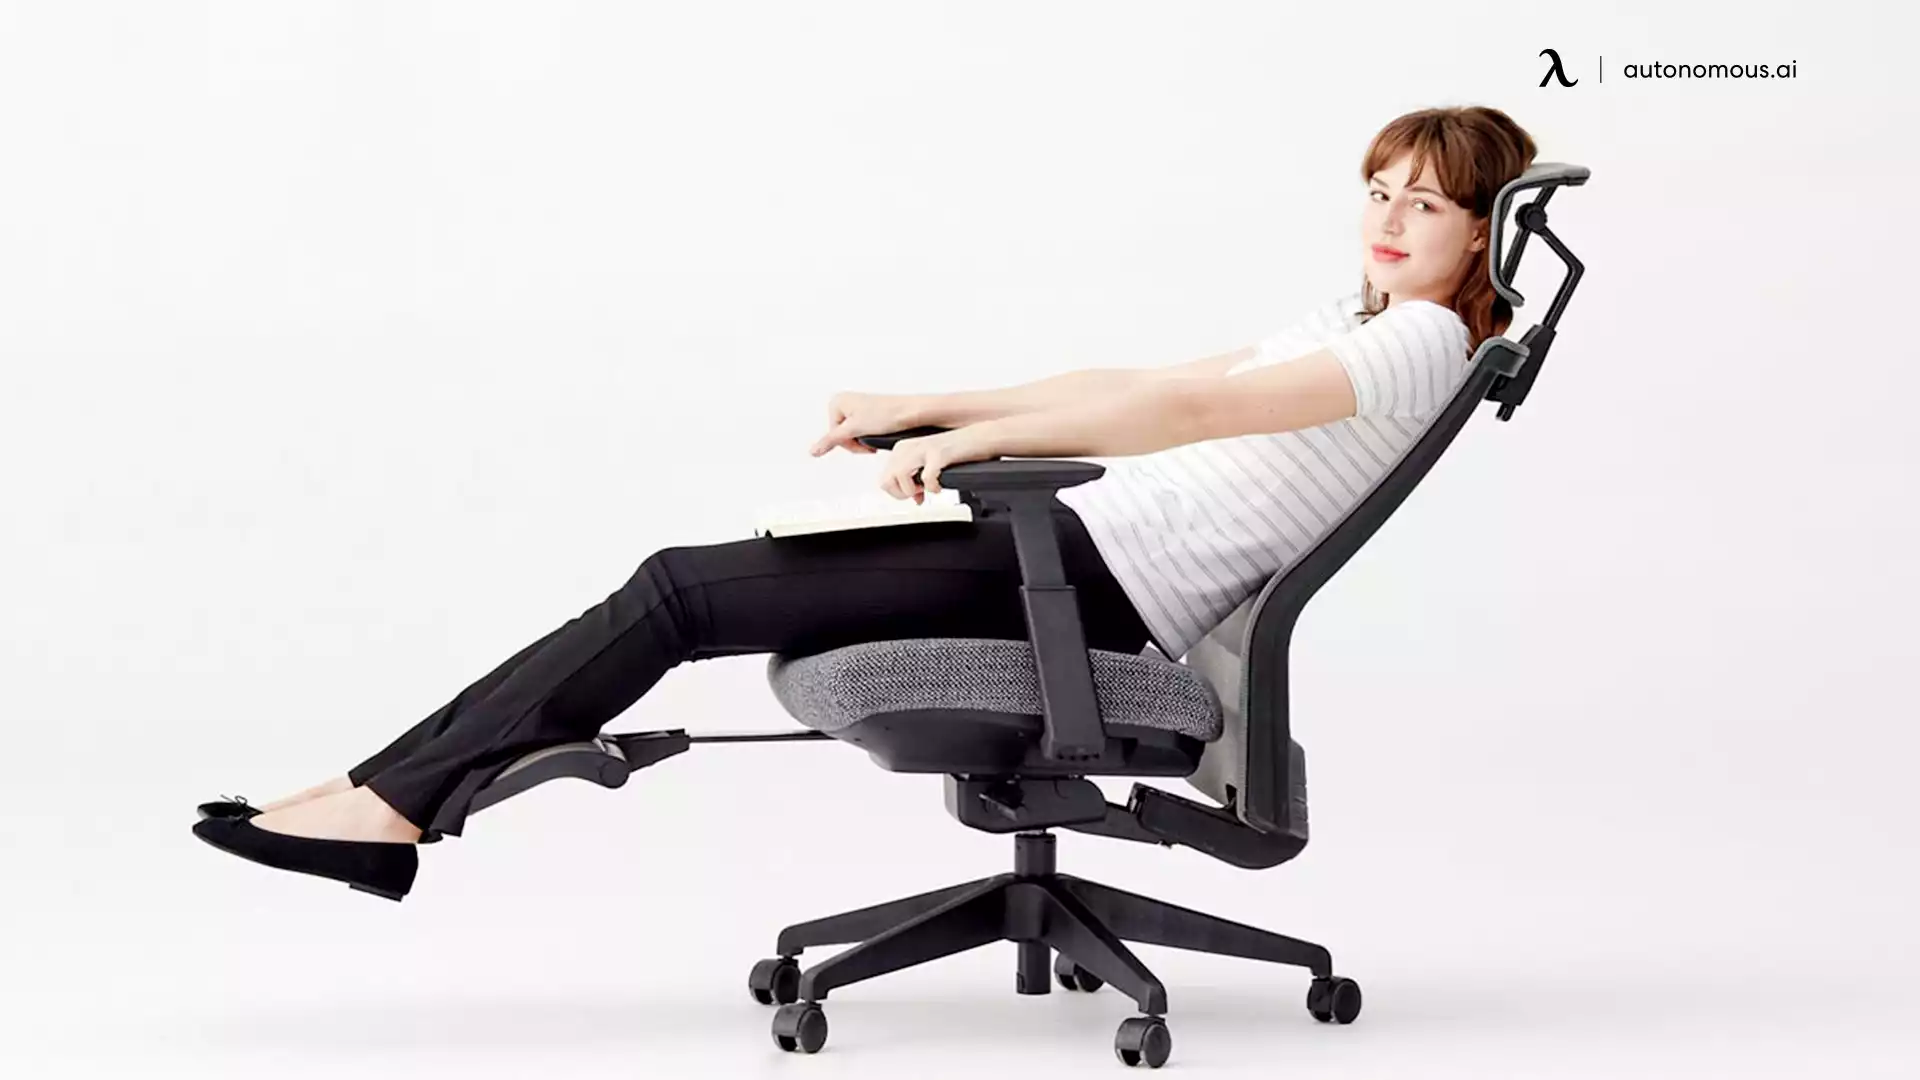 Reclining ergonomic chair